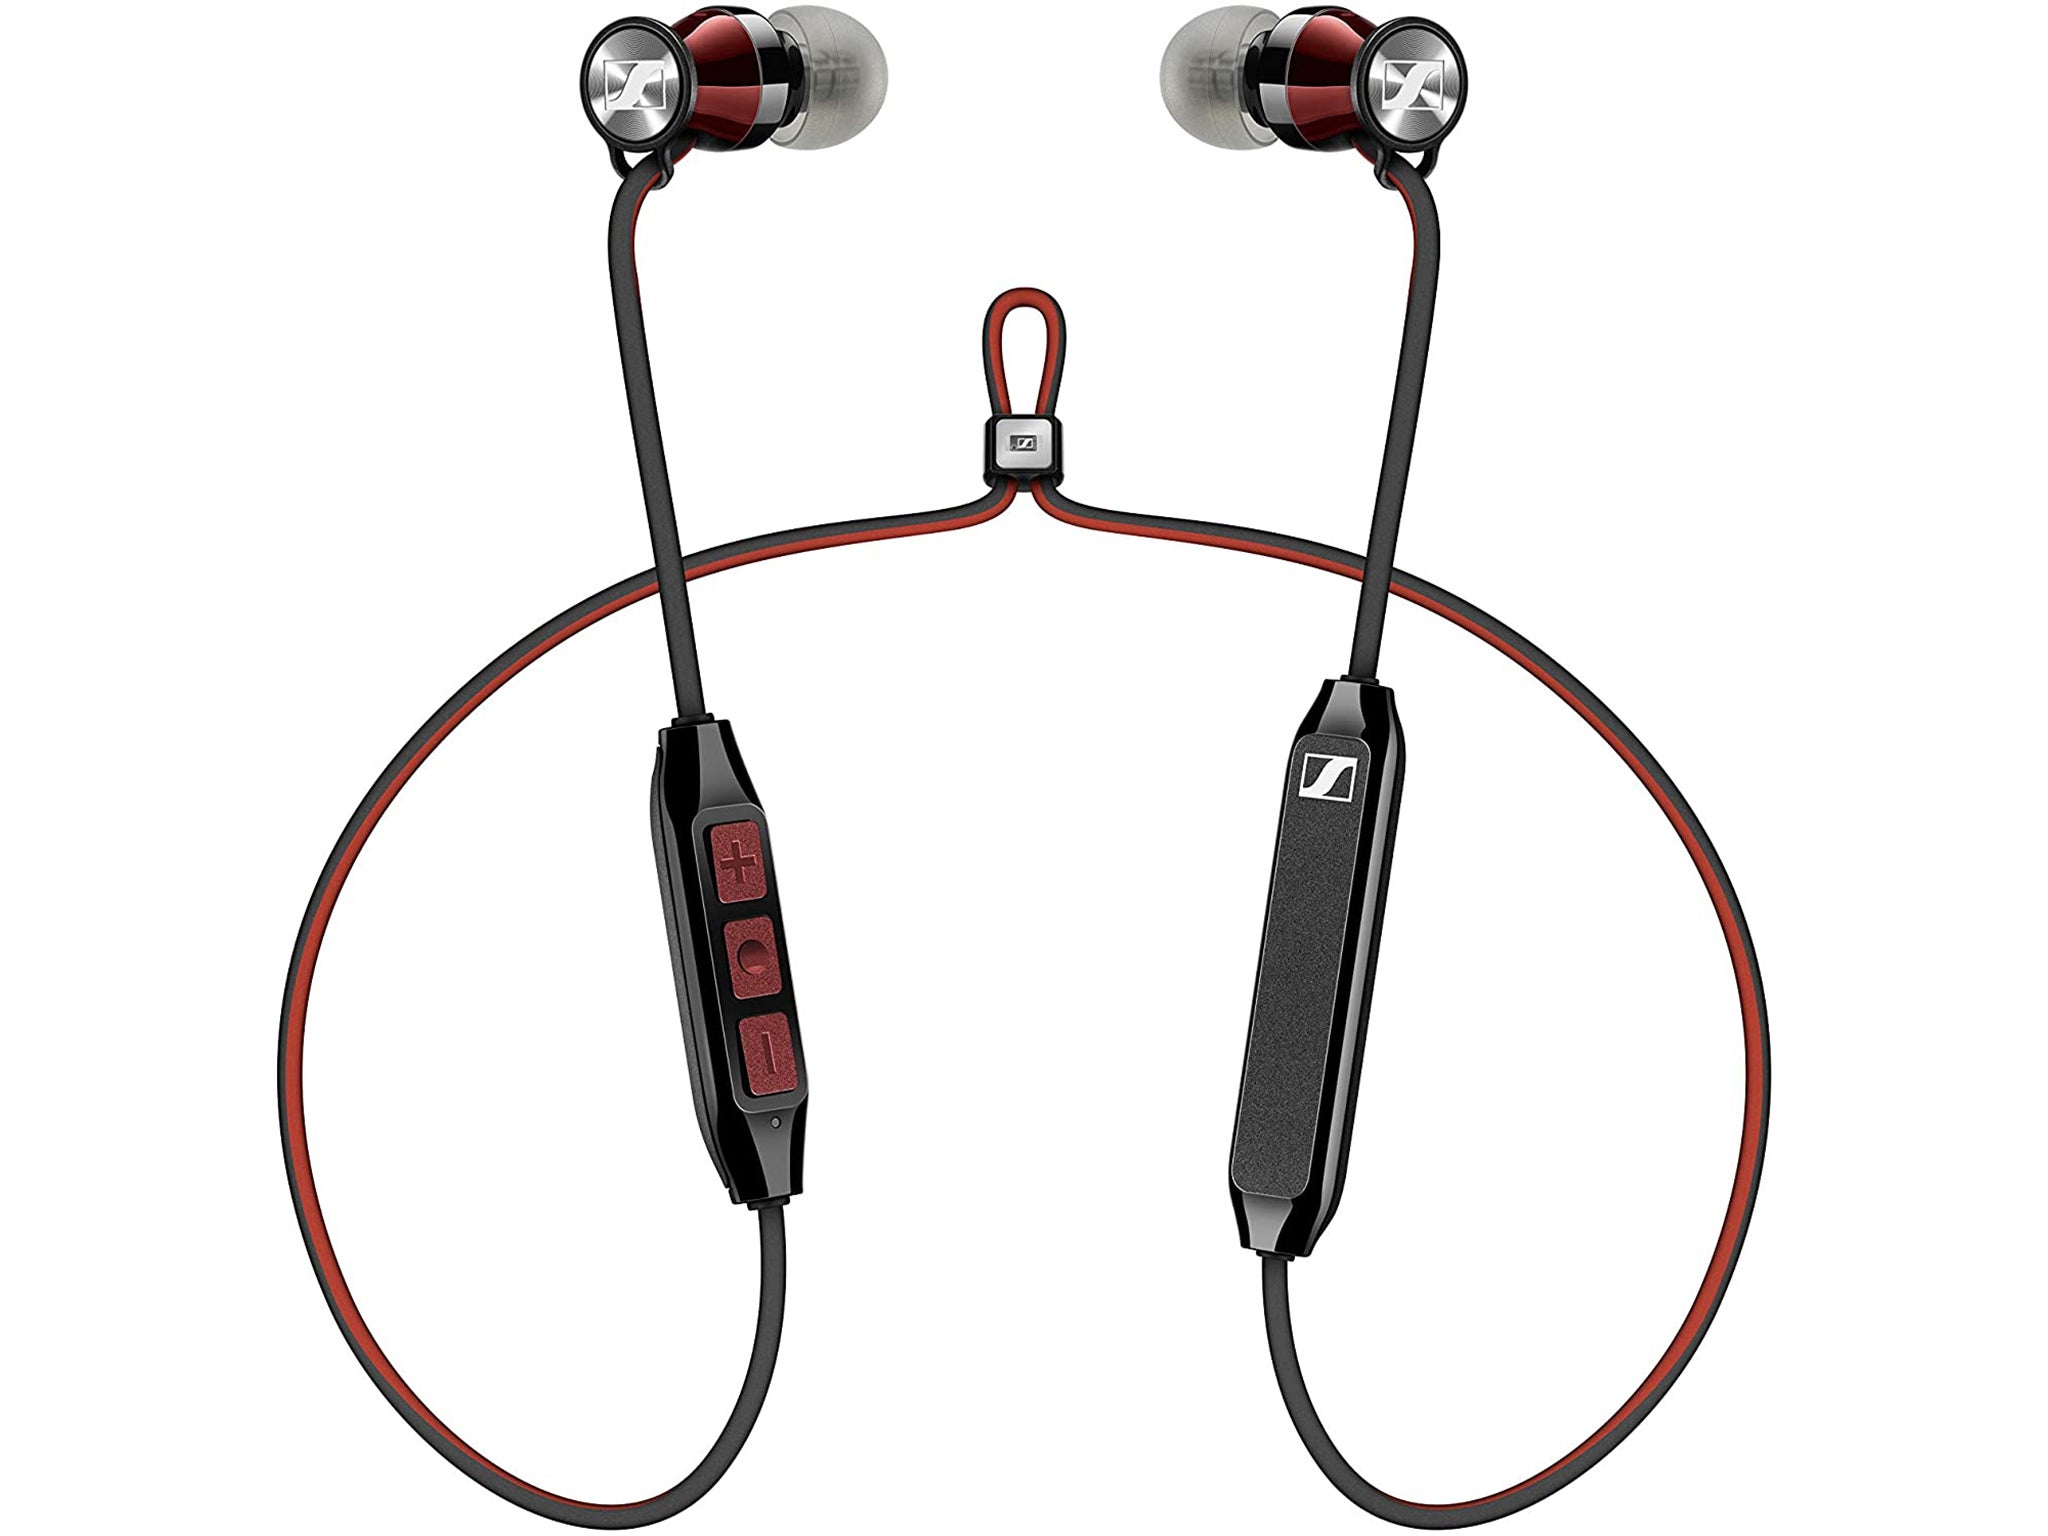 sennheiser headphones with mic amazon